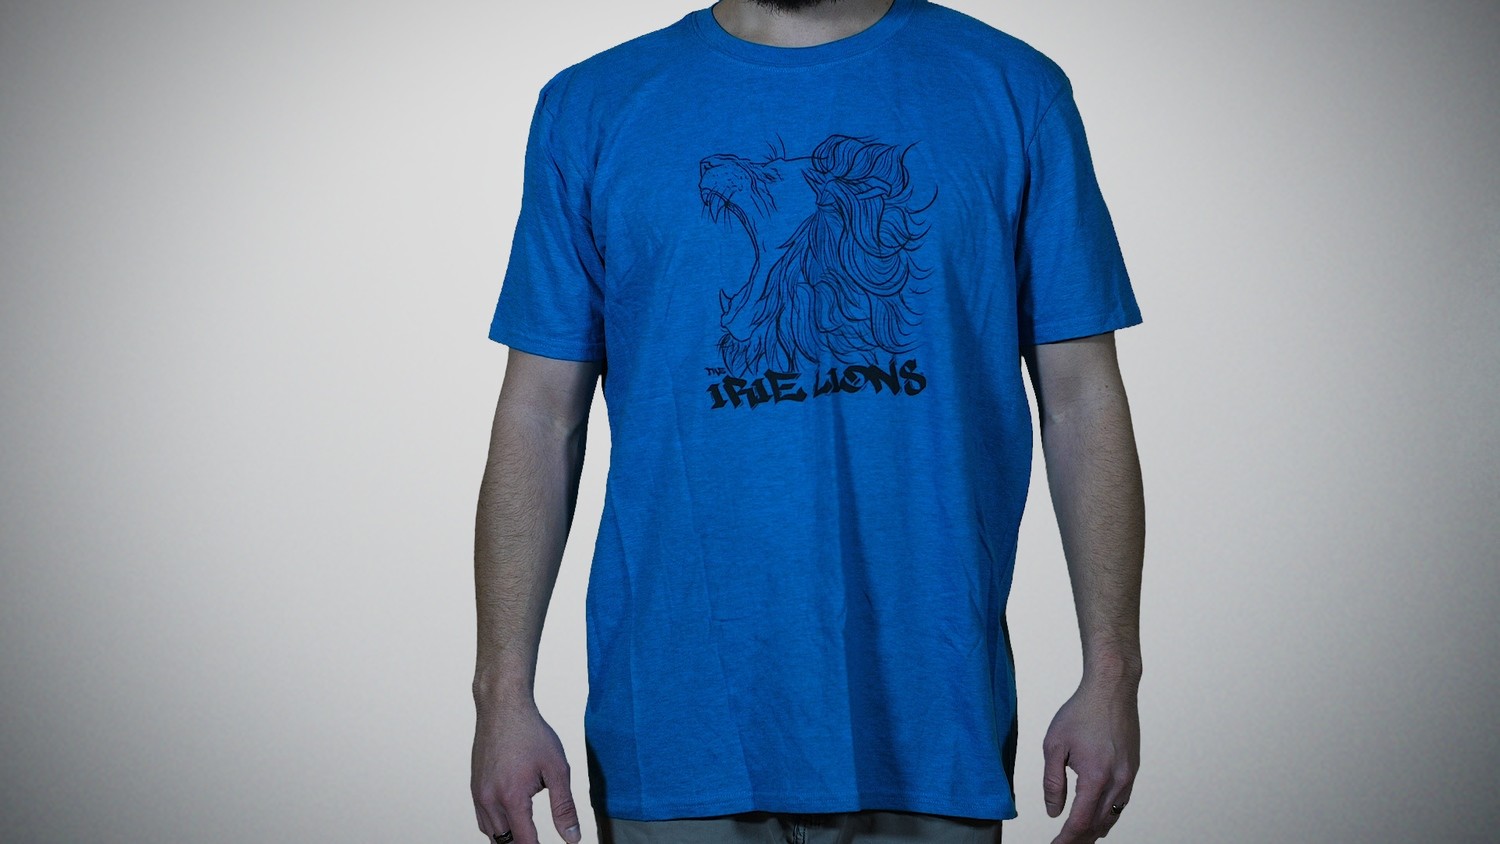 The Irie Lions Lion shirt (EP album design)